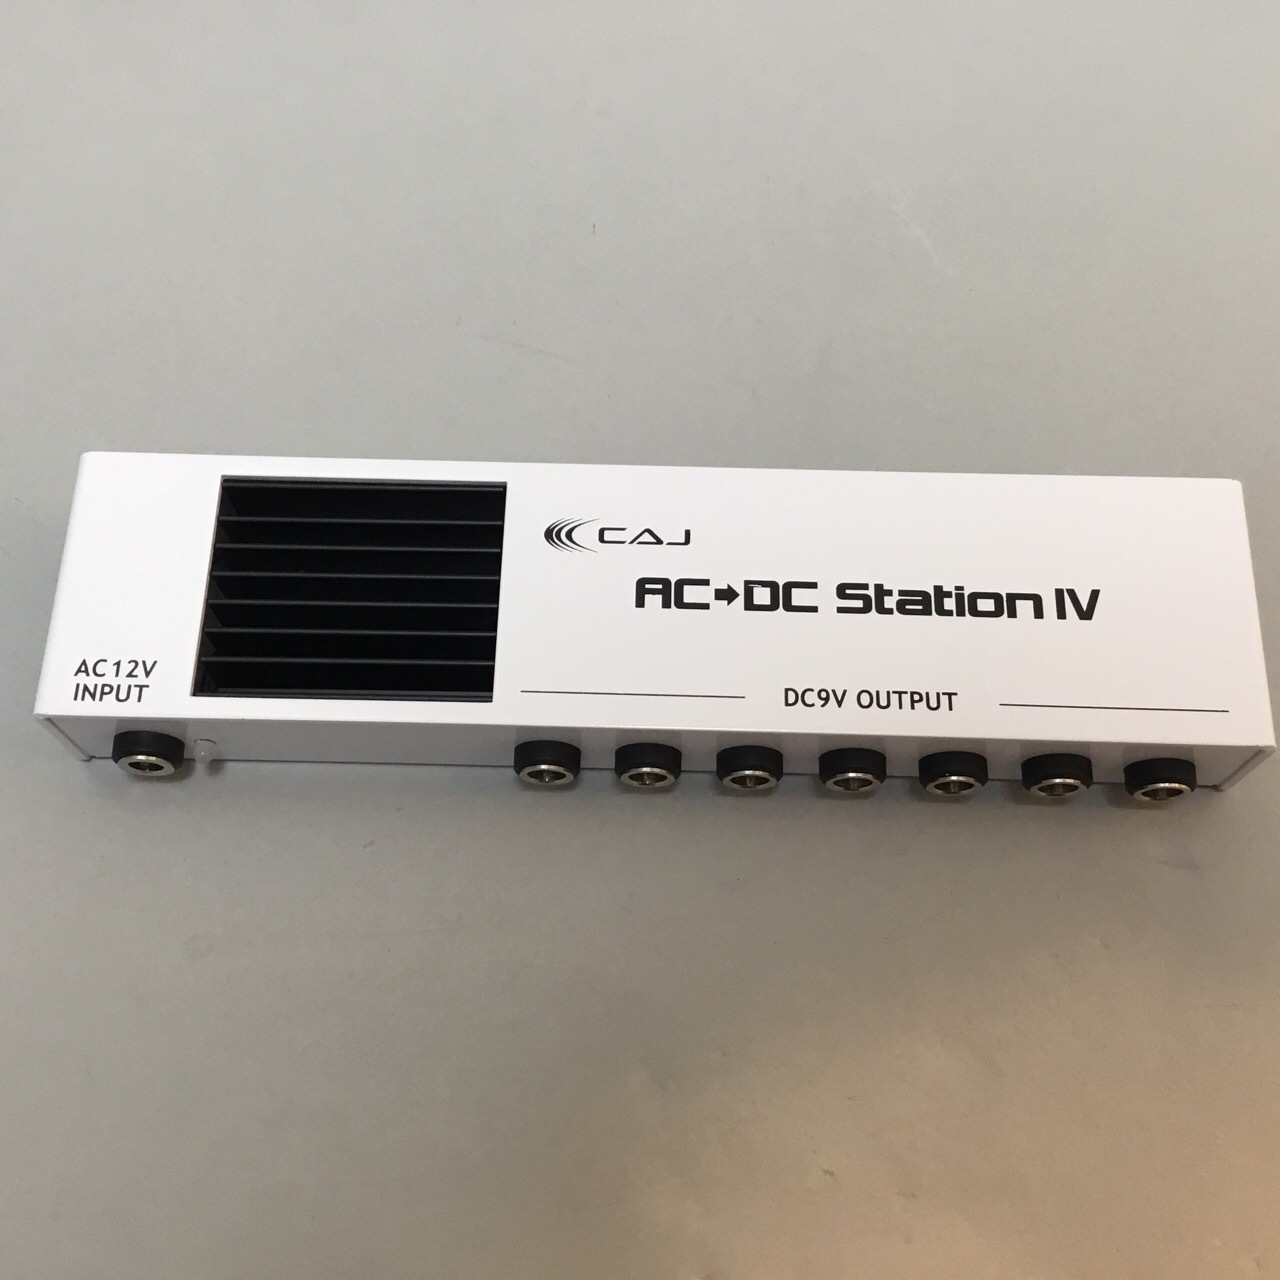 Custom Audio Japan DC/AC Supply 8.1